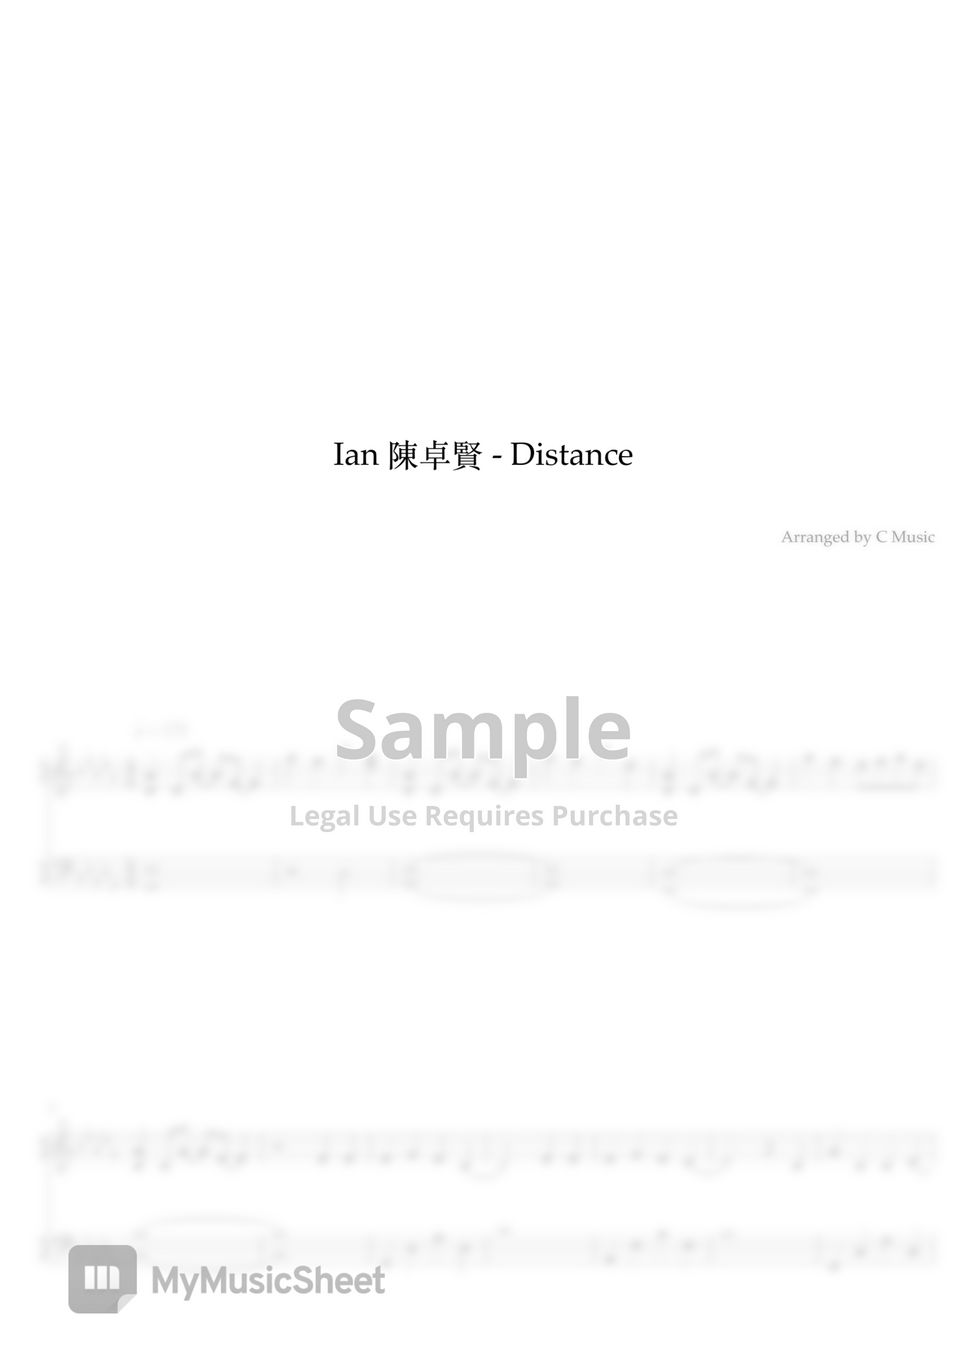 Ian 陳卓賢 - Distance by C Music